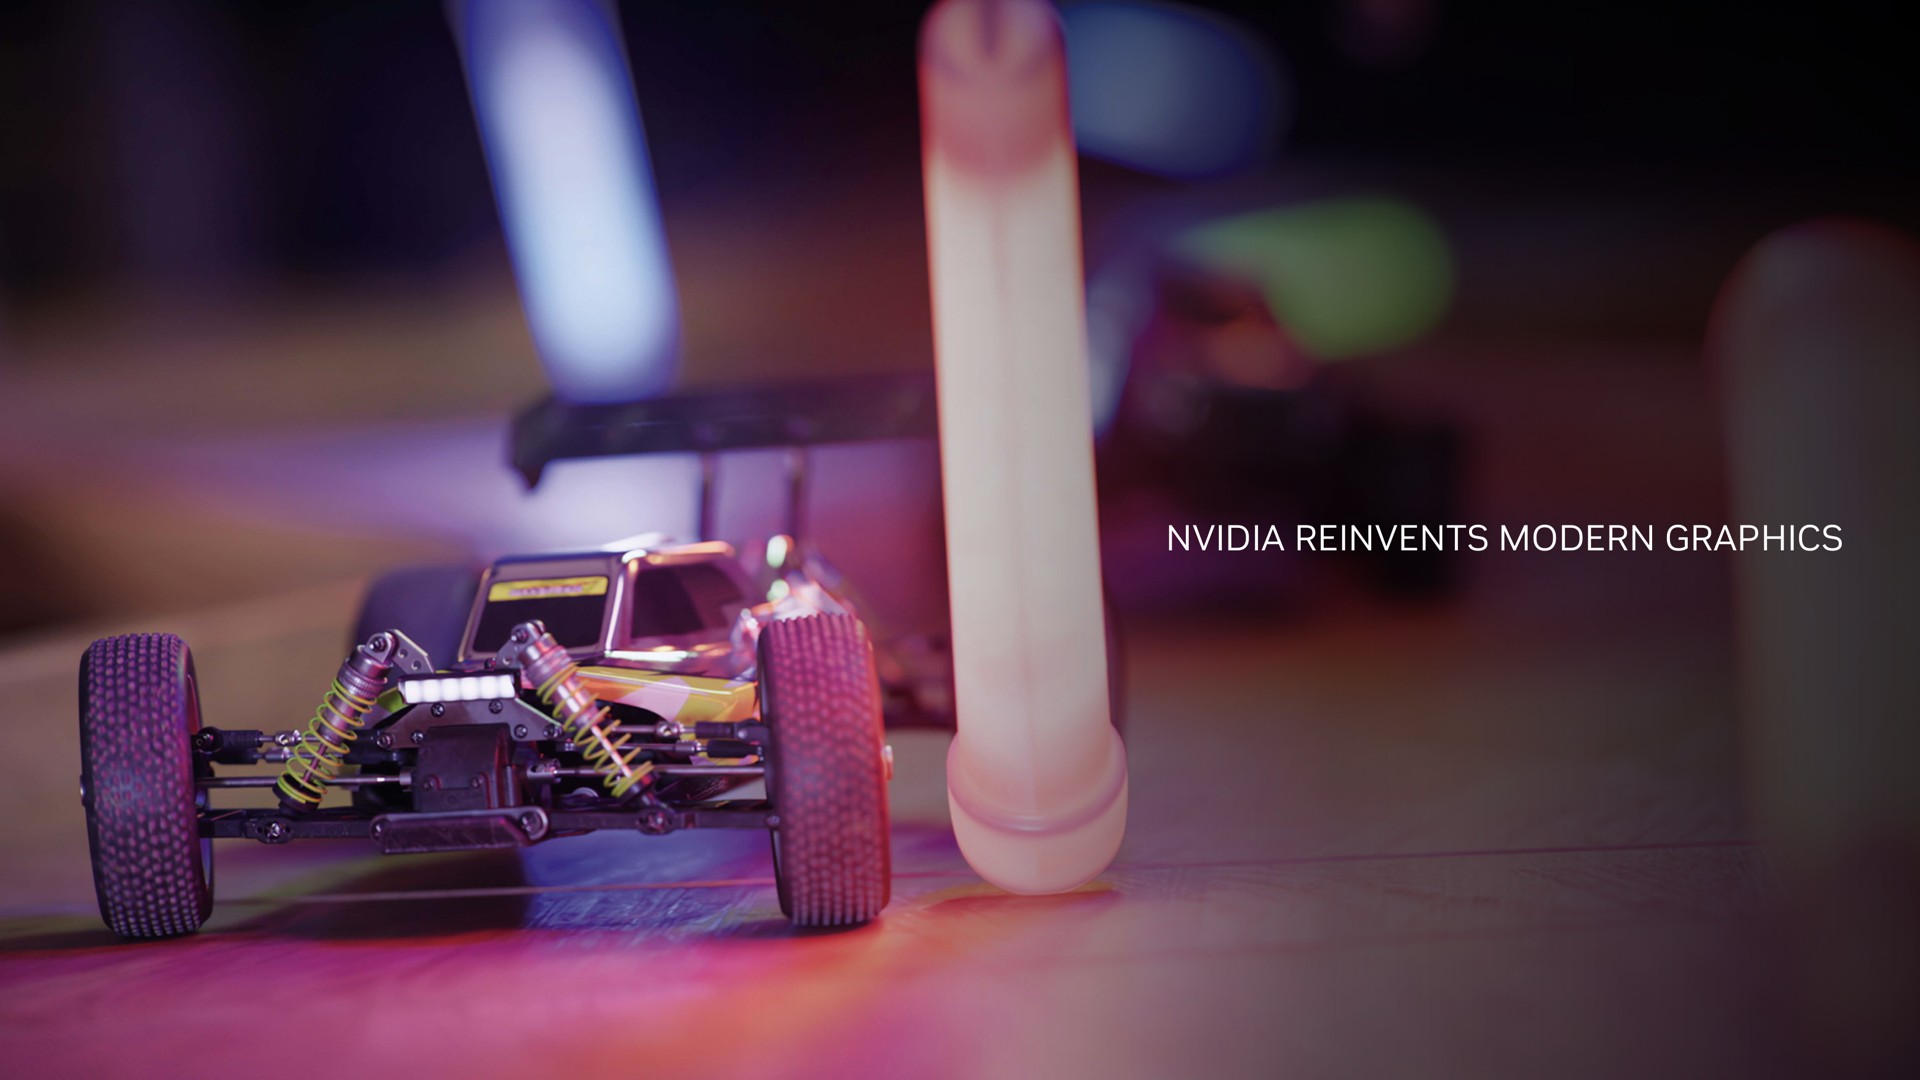 reinvents modern graphics | NVIDIA